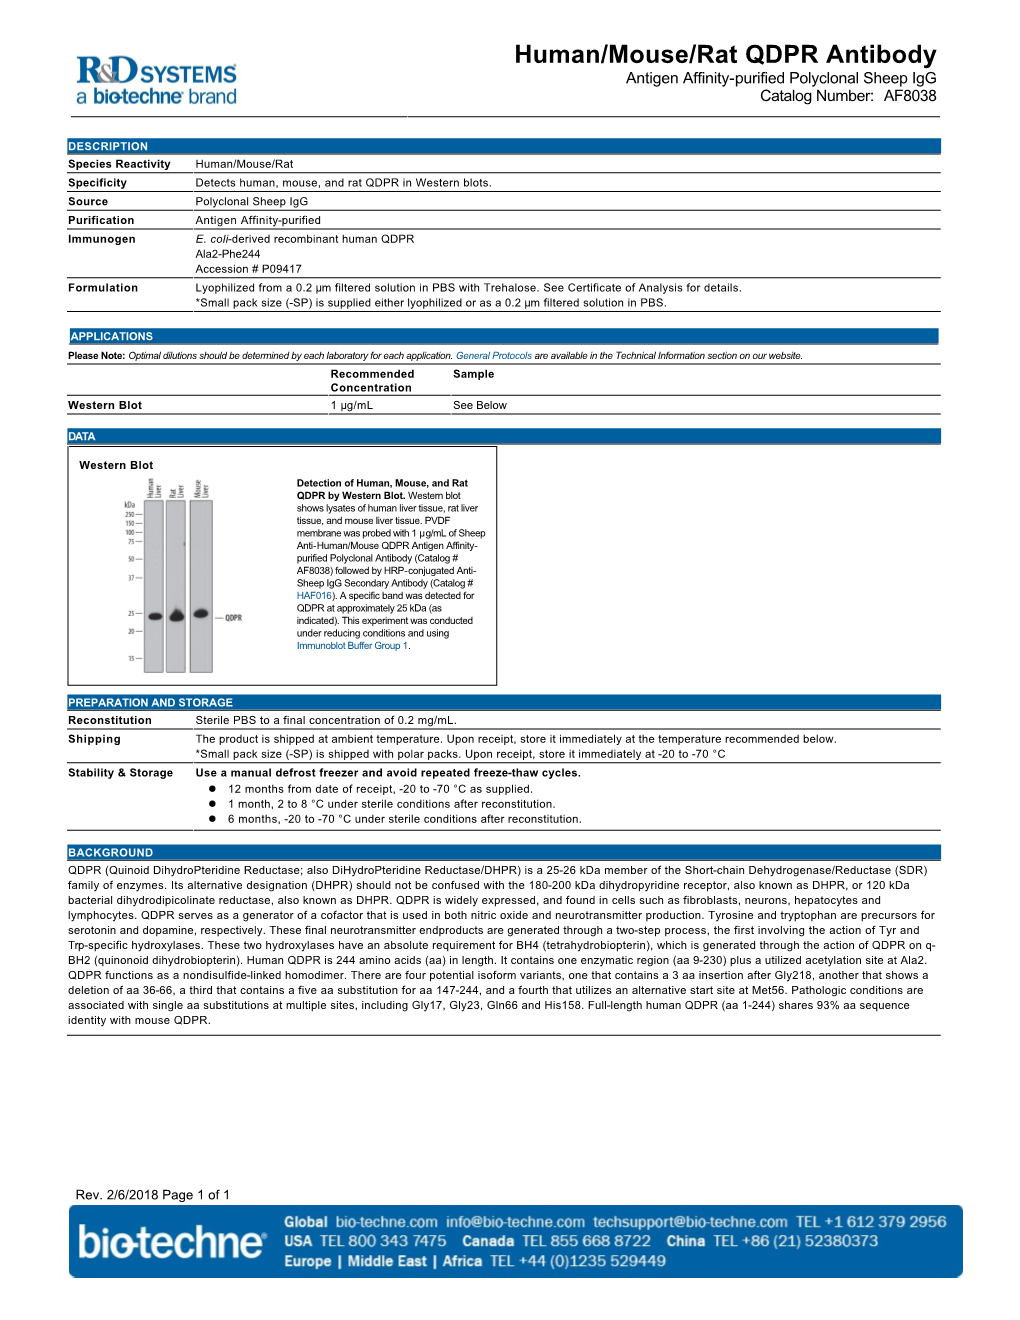 Human/Mouse/Rat QDPR Antibody Antigen Affinity-Purified Polyclonal Sheep Igg Catalog Number: AF8038